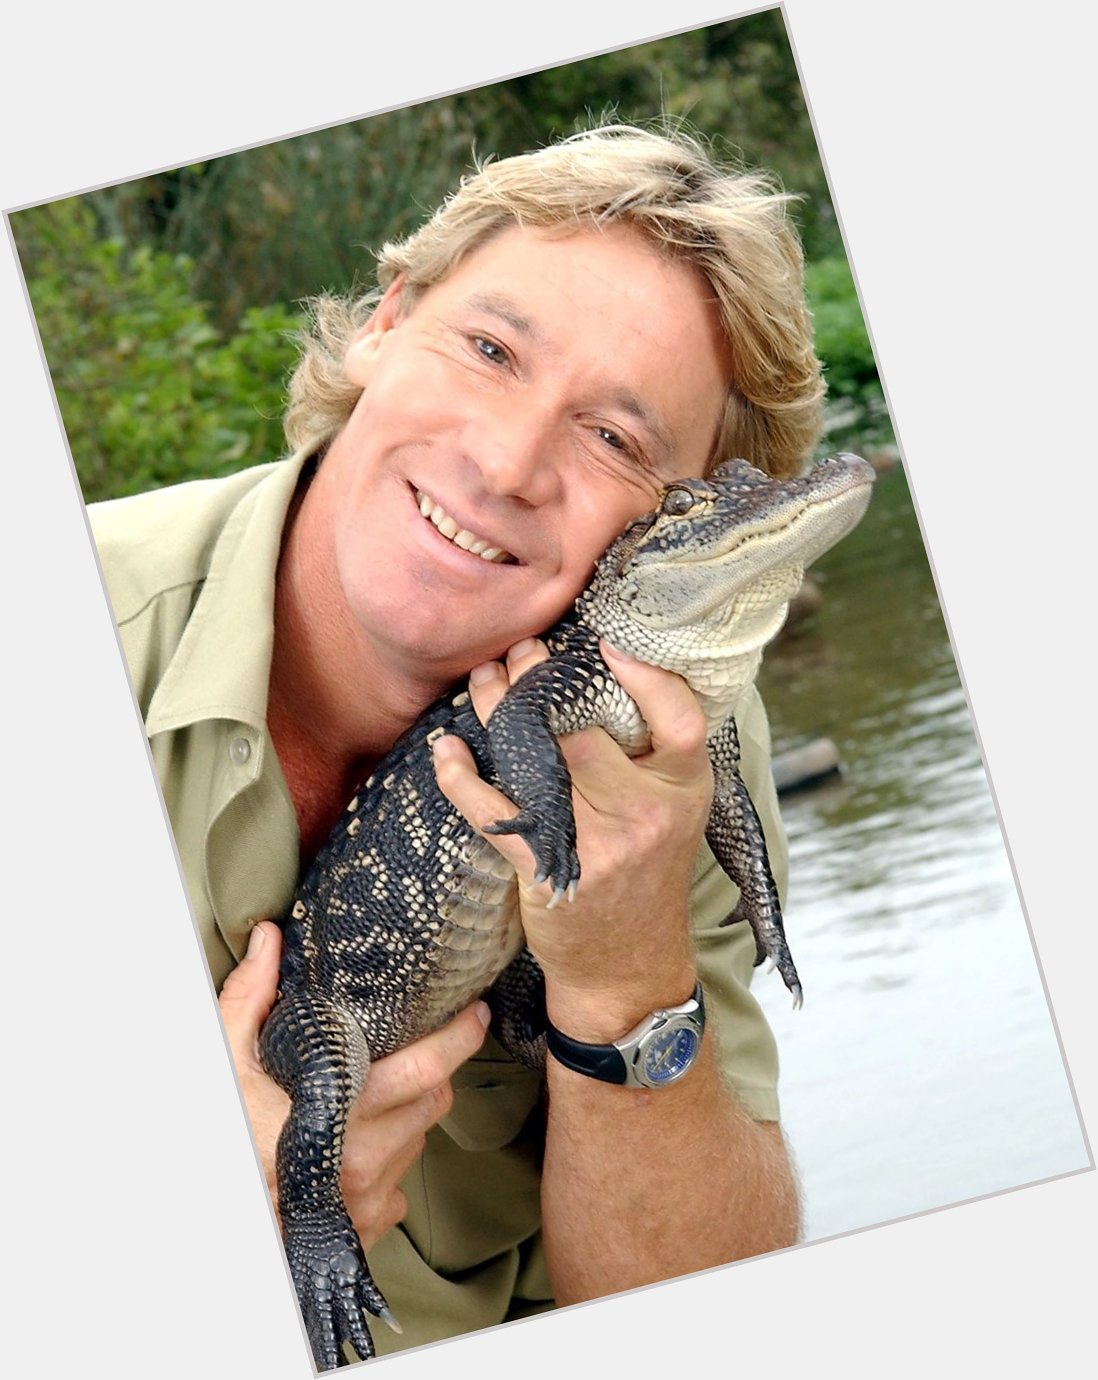 Happy birthday to Steve Irwin, the wildlife warrior!  